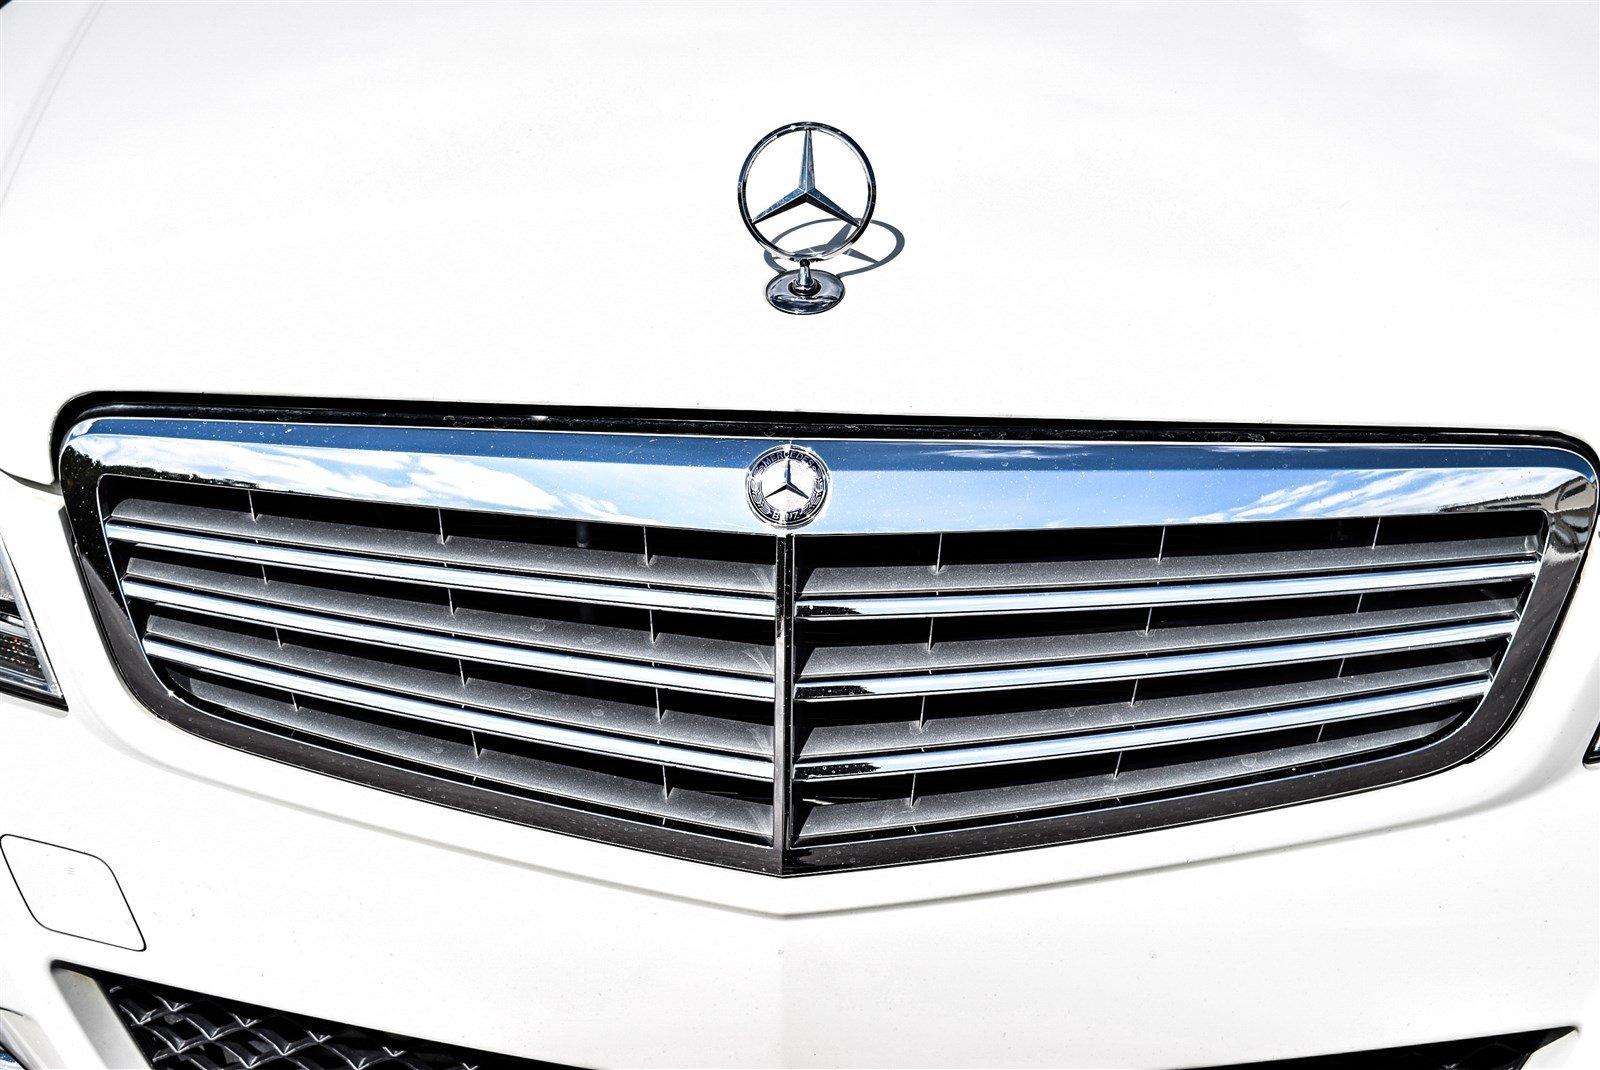 Used 2012 Mercedes-Benz C-Class C250 Luxury for sale Sold at Gravity Autos Marietta in Marietta GA 30060 8